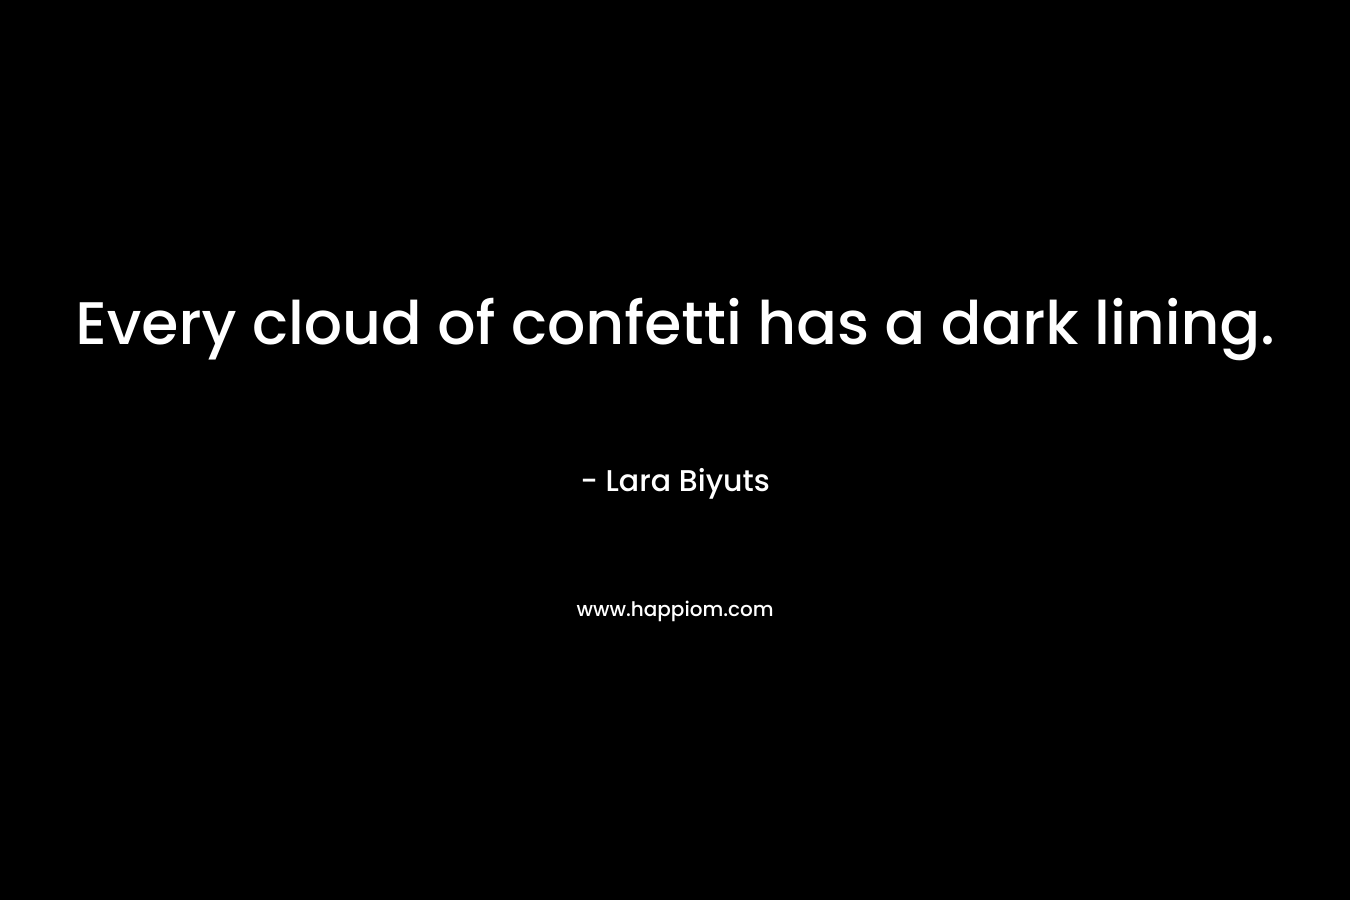 Every cloud of confetti has a dark lining.